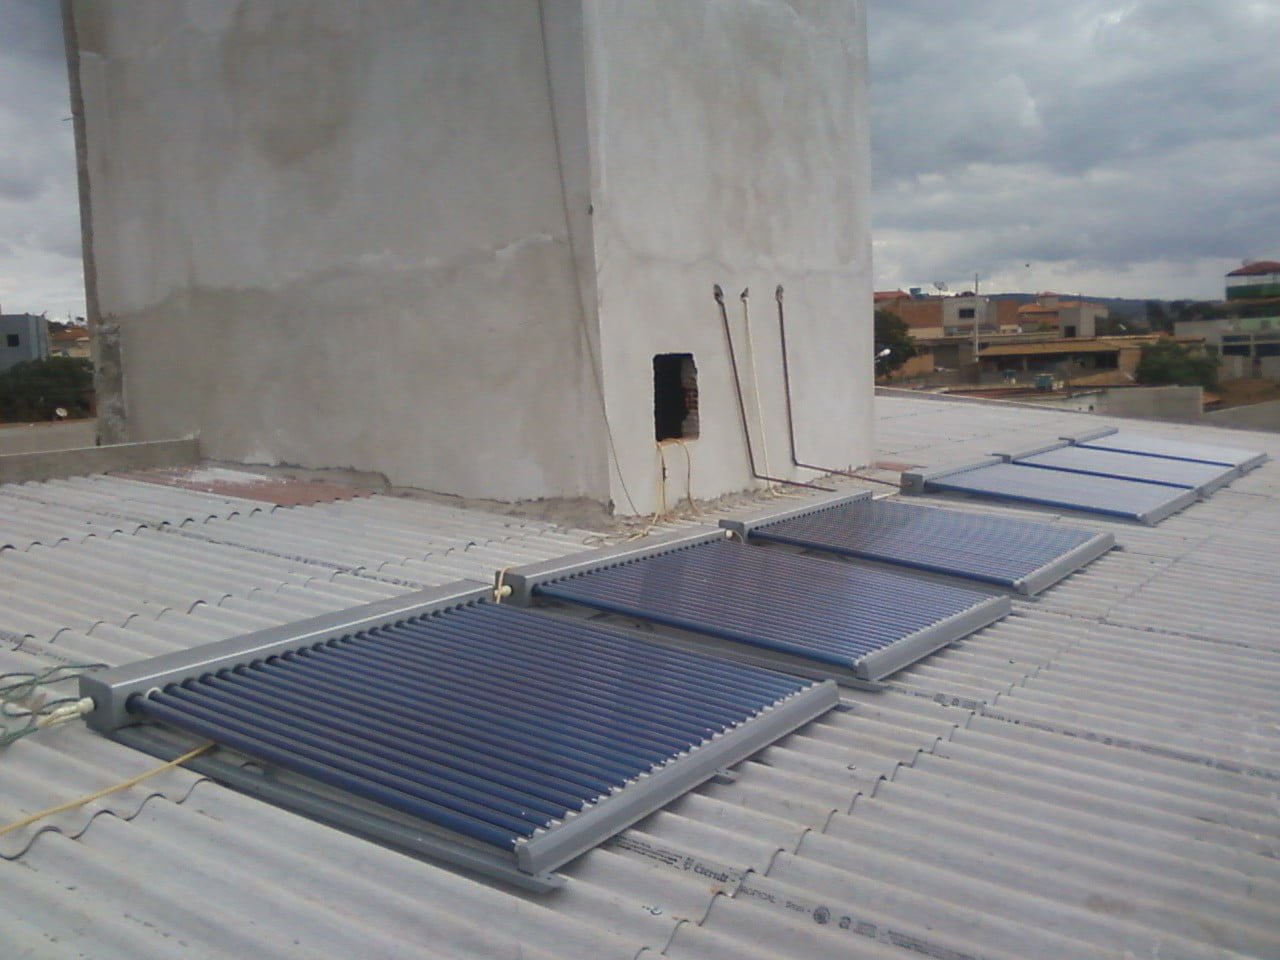 Aquecedor solar a vácuo modular